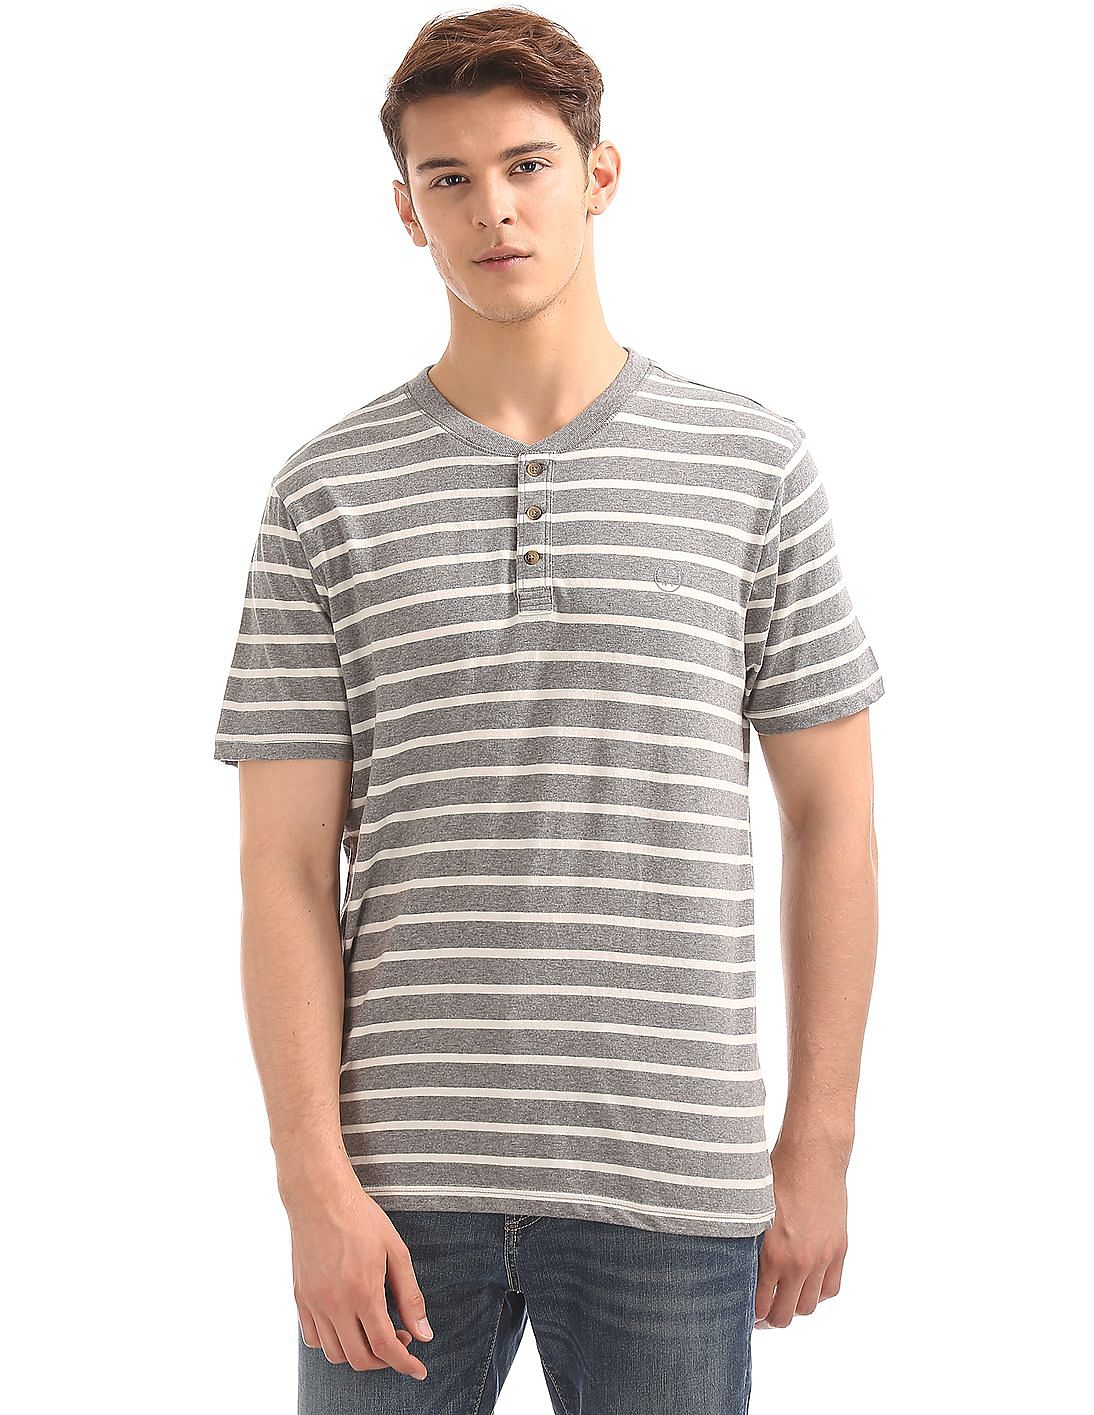 Buy Aeropostale Striped Henley T-Shirt - NNNOW.com